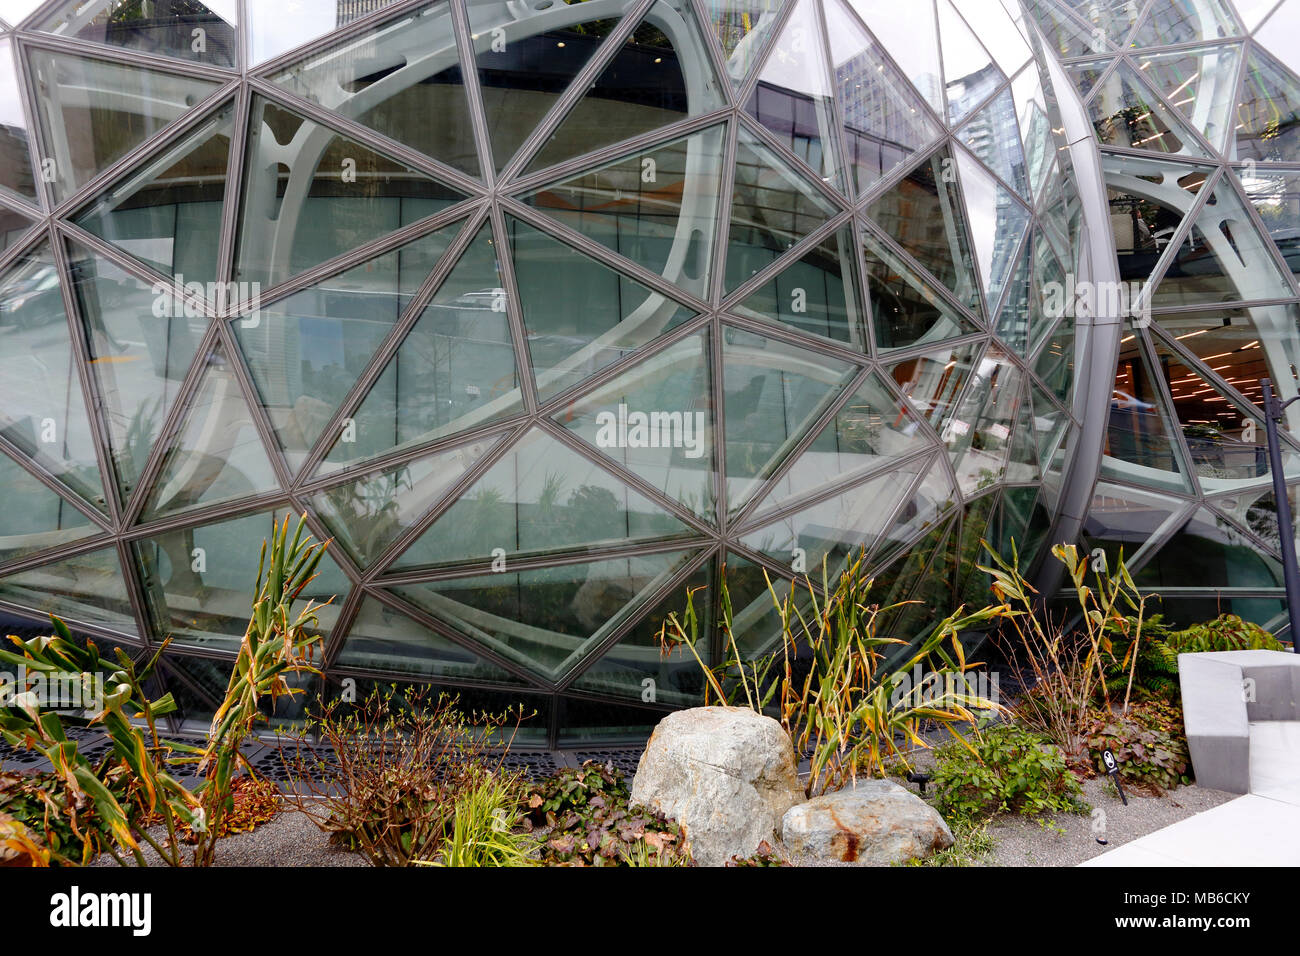 Amazon Spheres office building in Downtown Seattle, Washington. Stock Photo